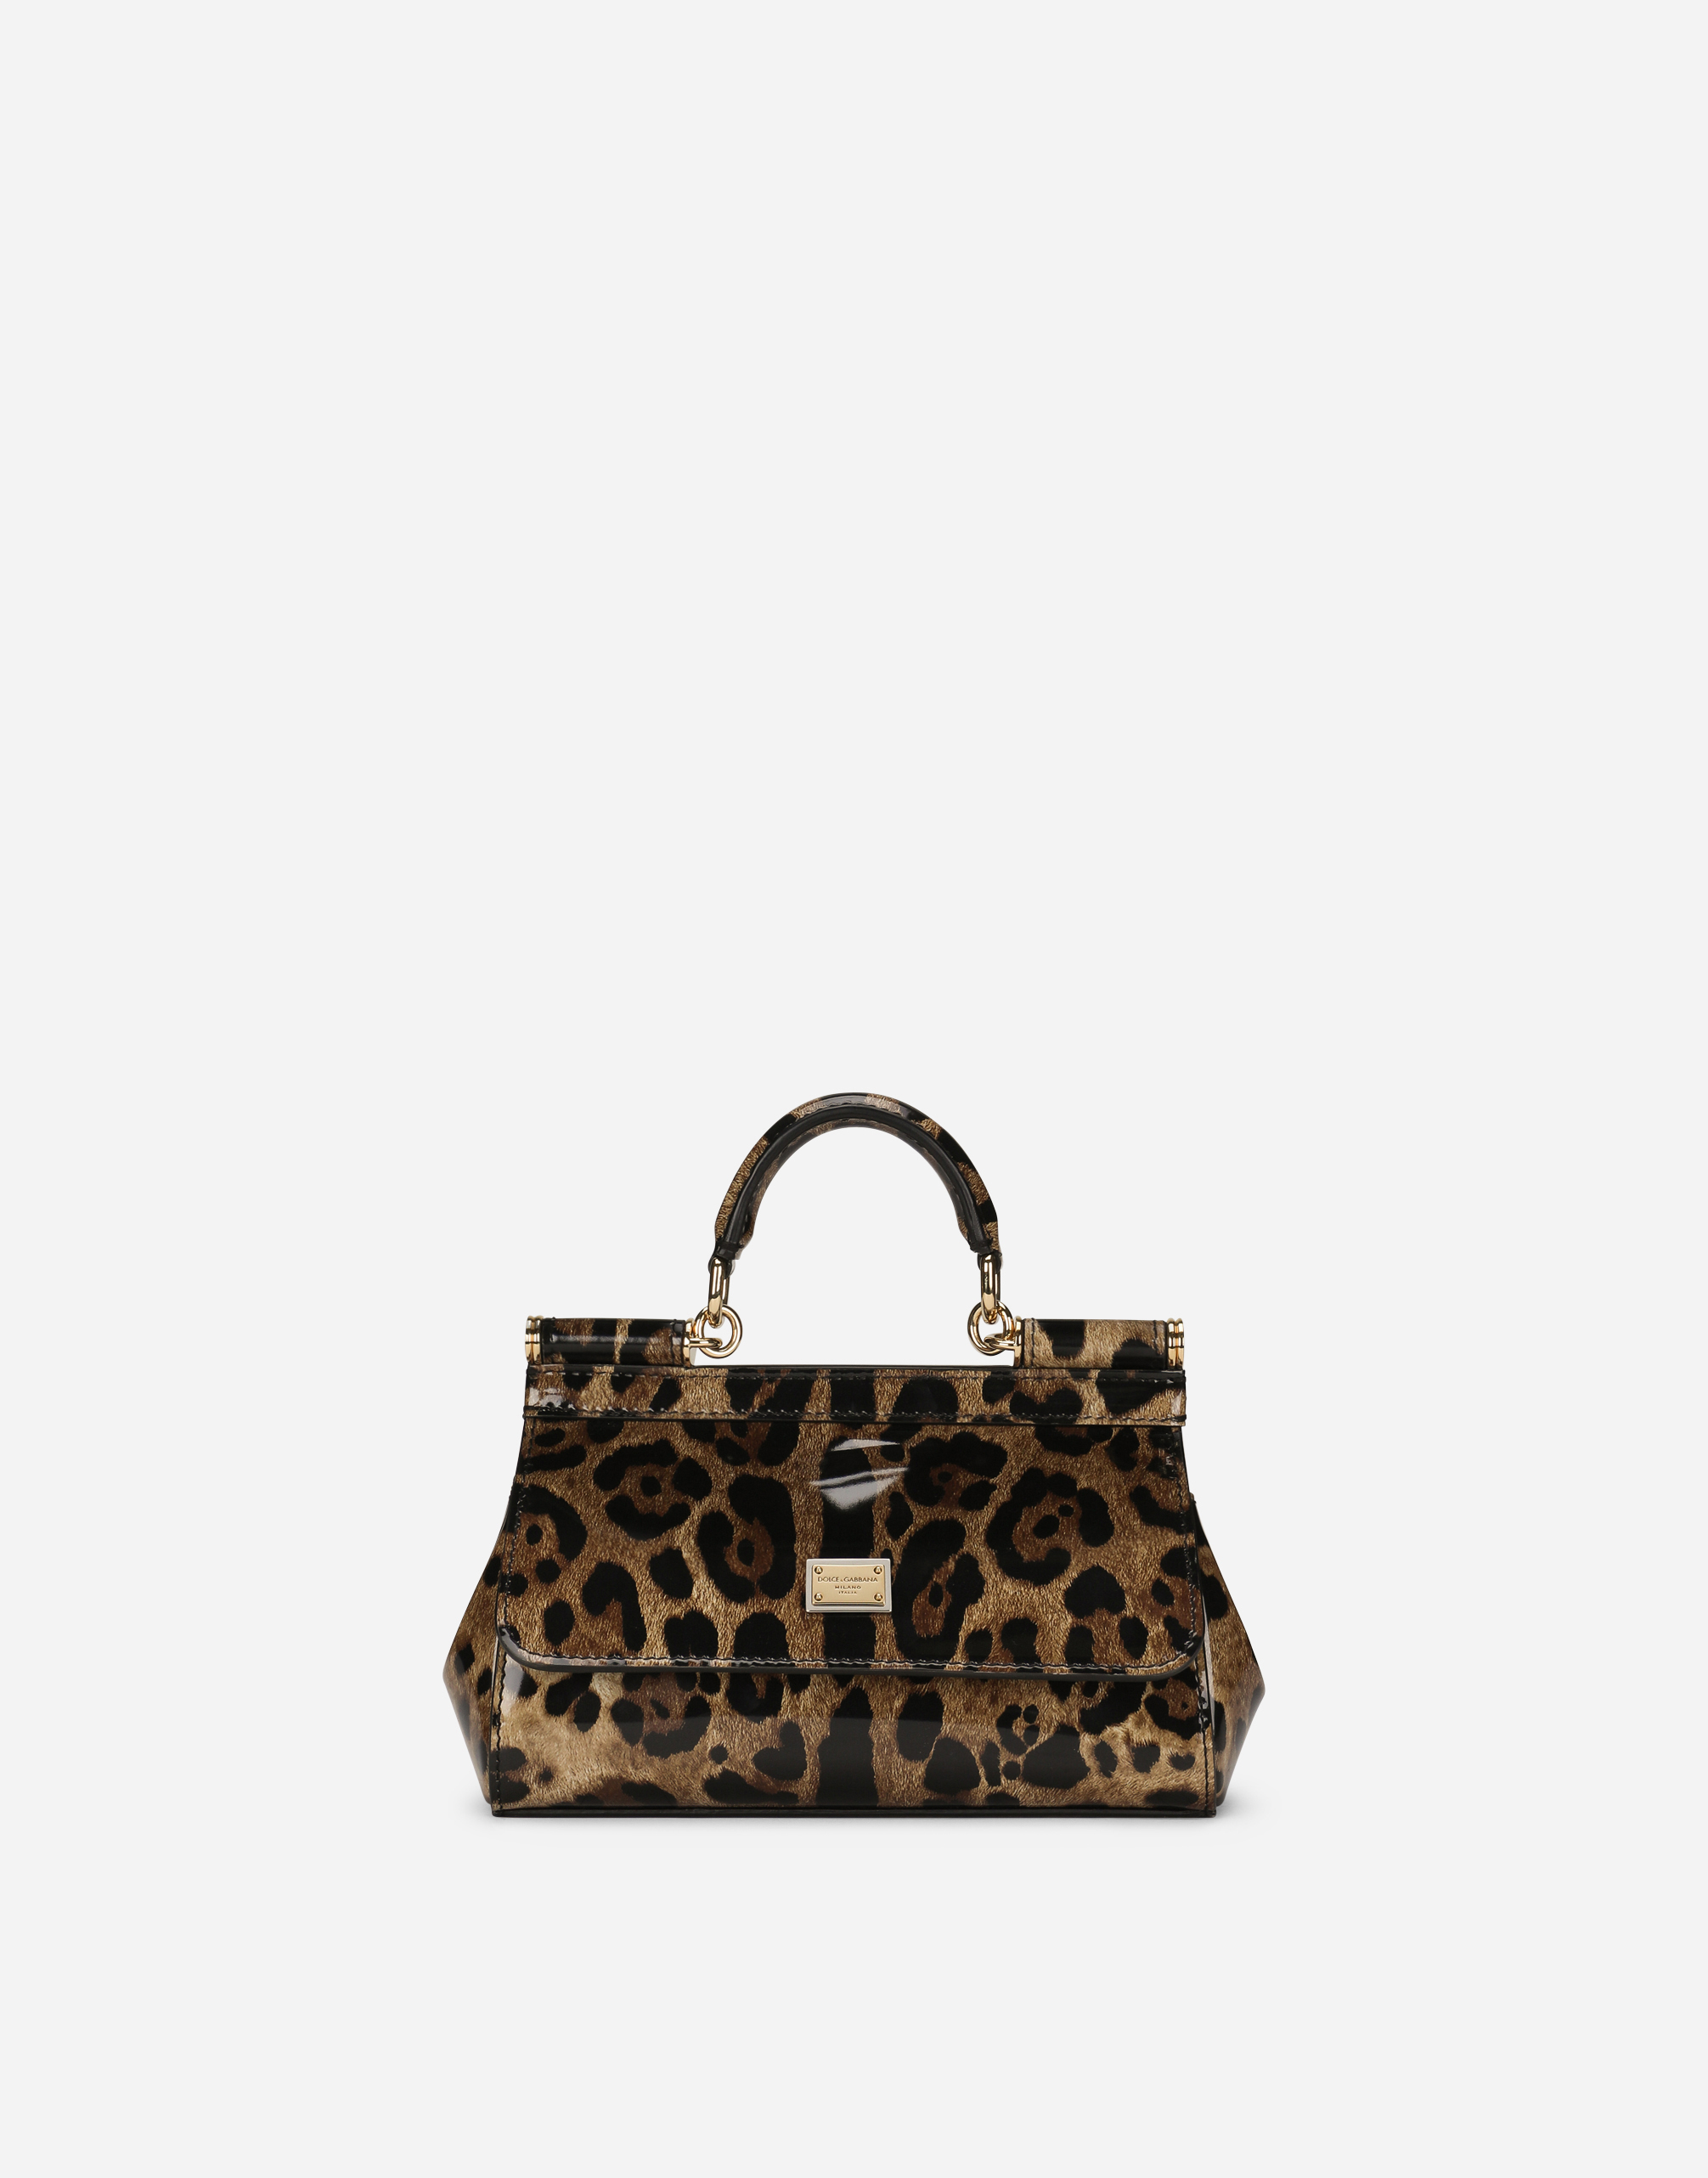 KIM DOLCE&GABBANA Small Sicily bag in leopard-print polished calfskin in Animal Print